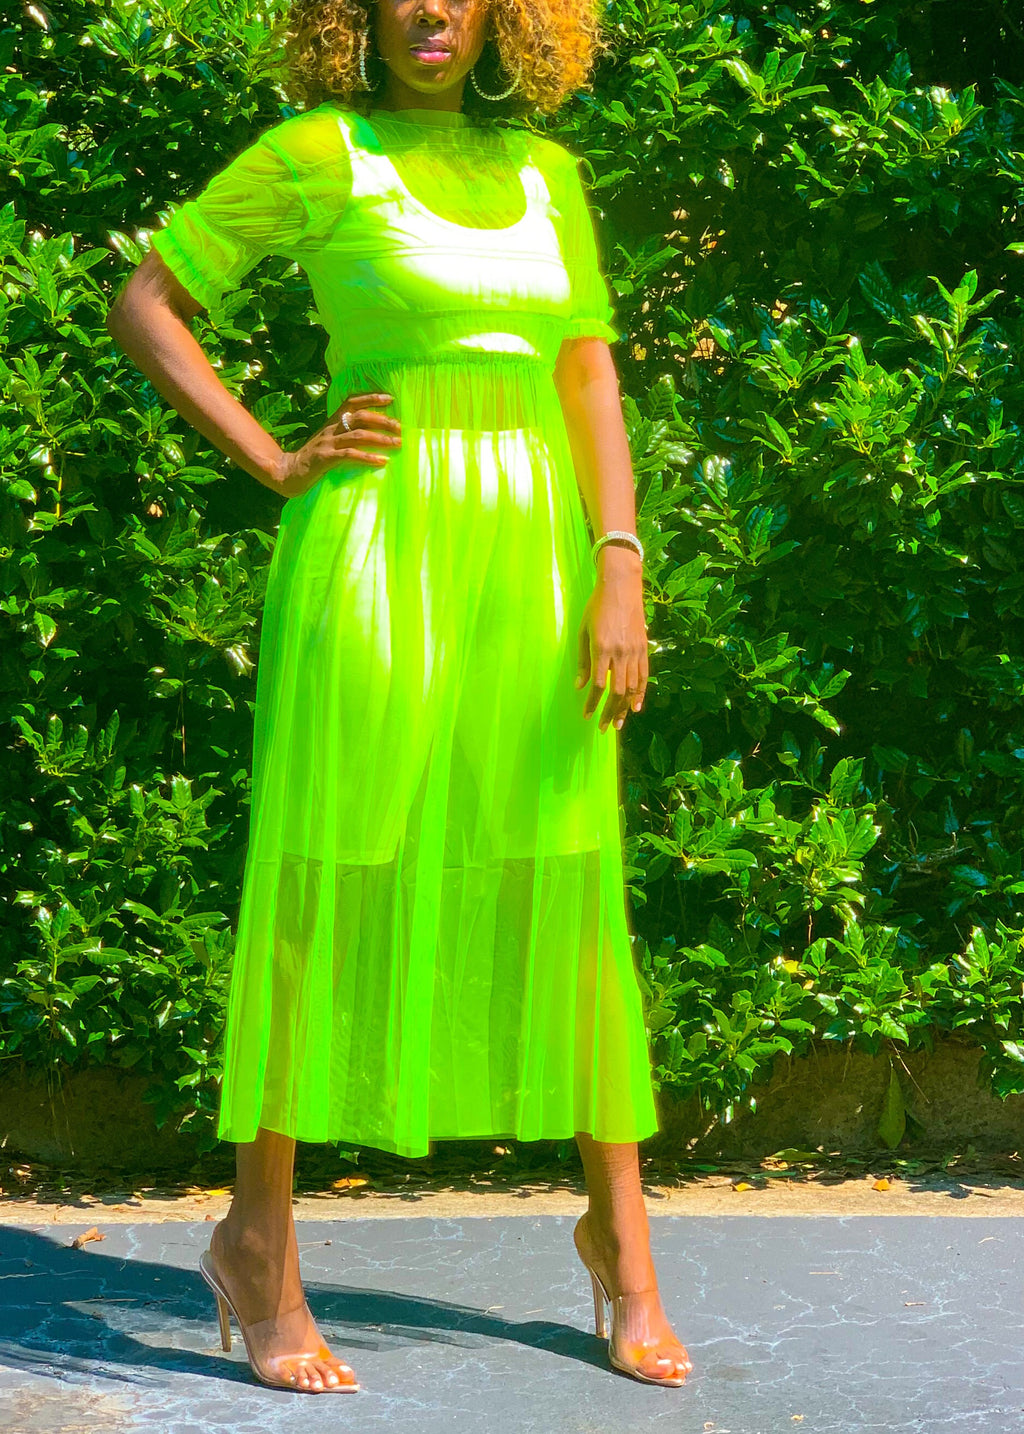 Neon Green Babydoll Dress